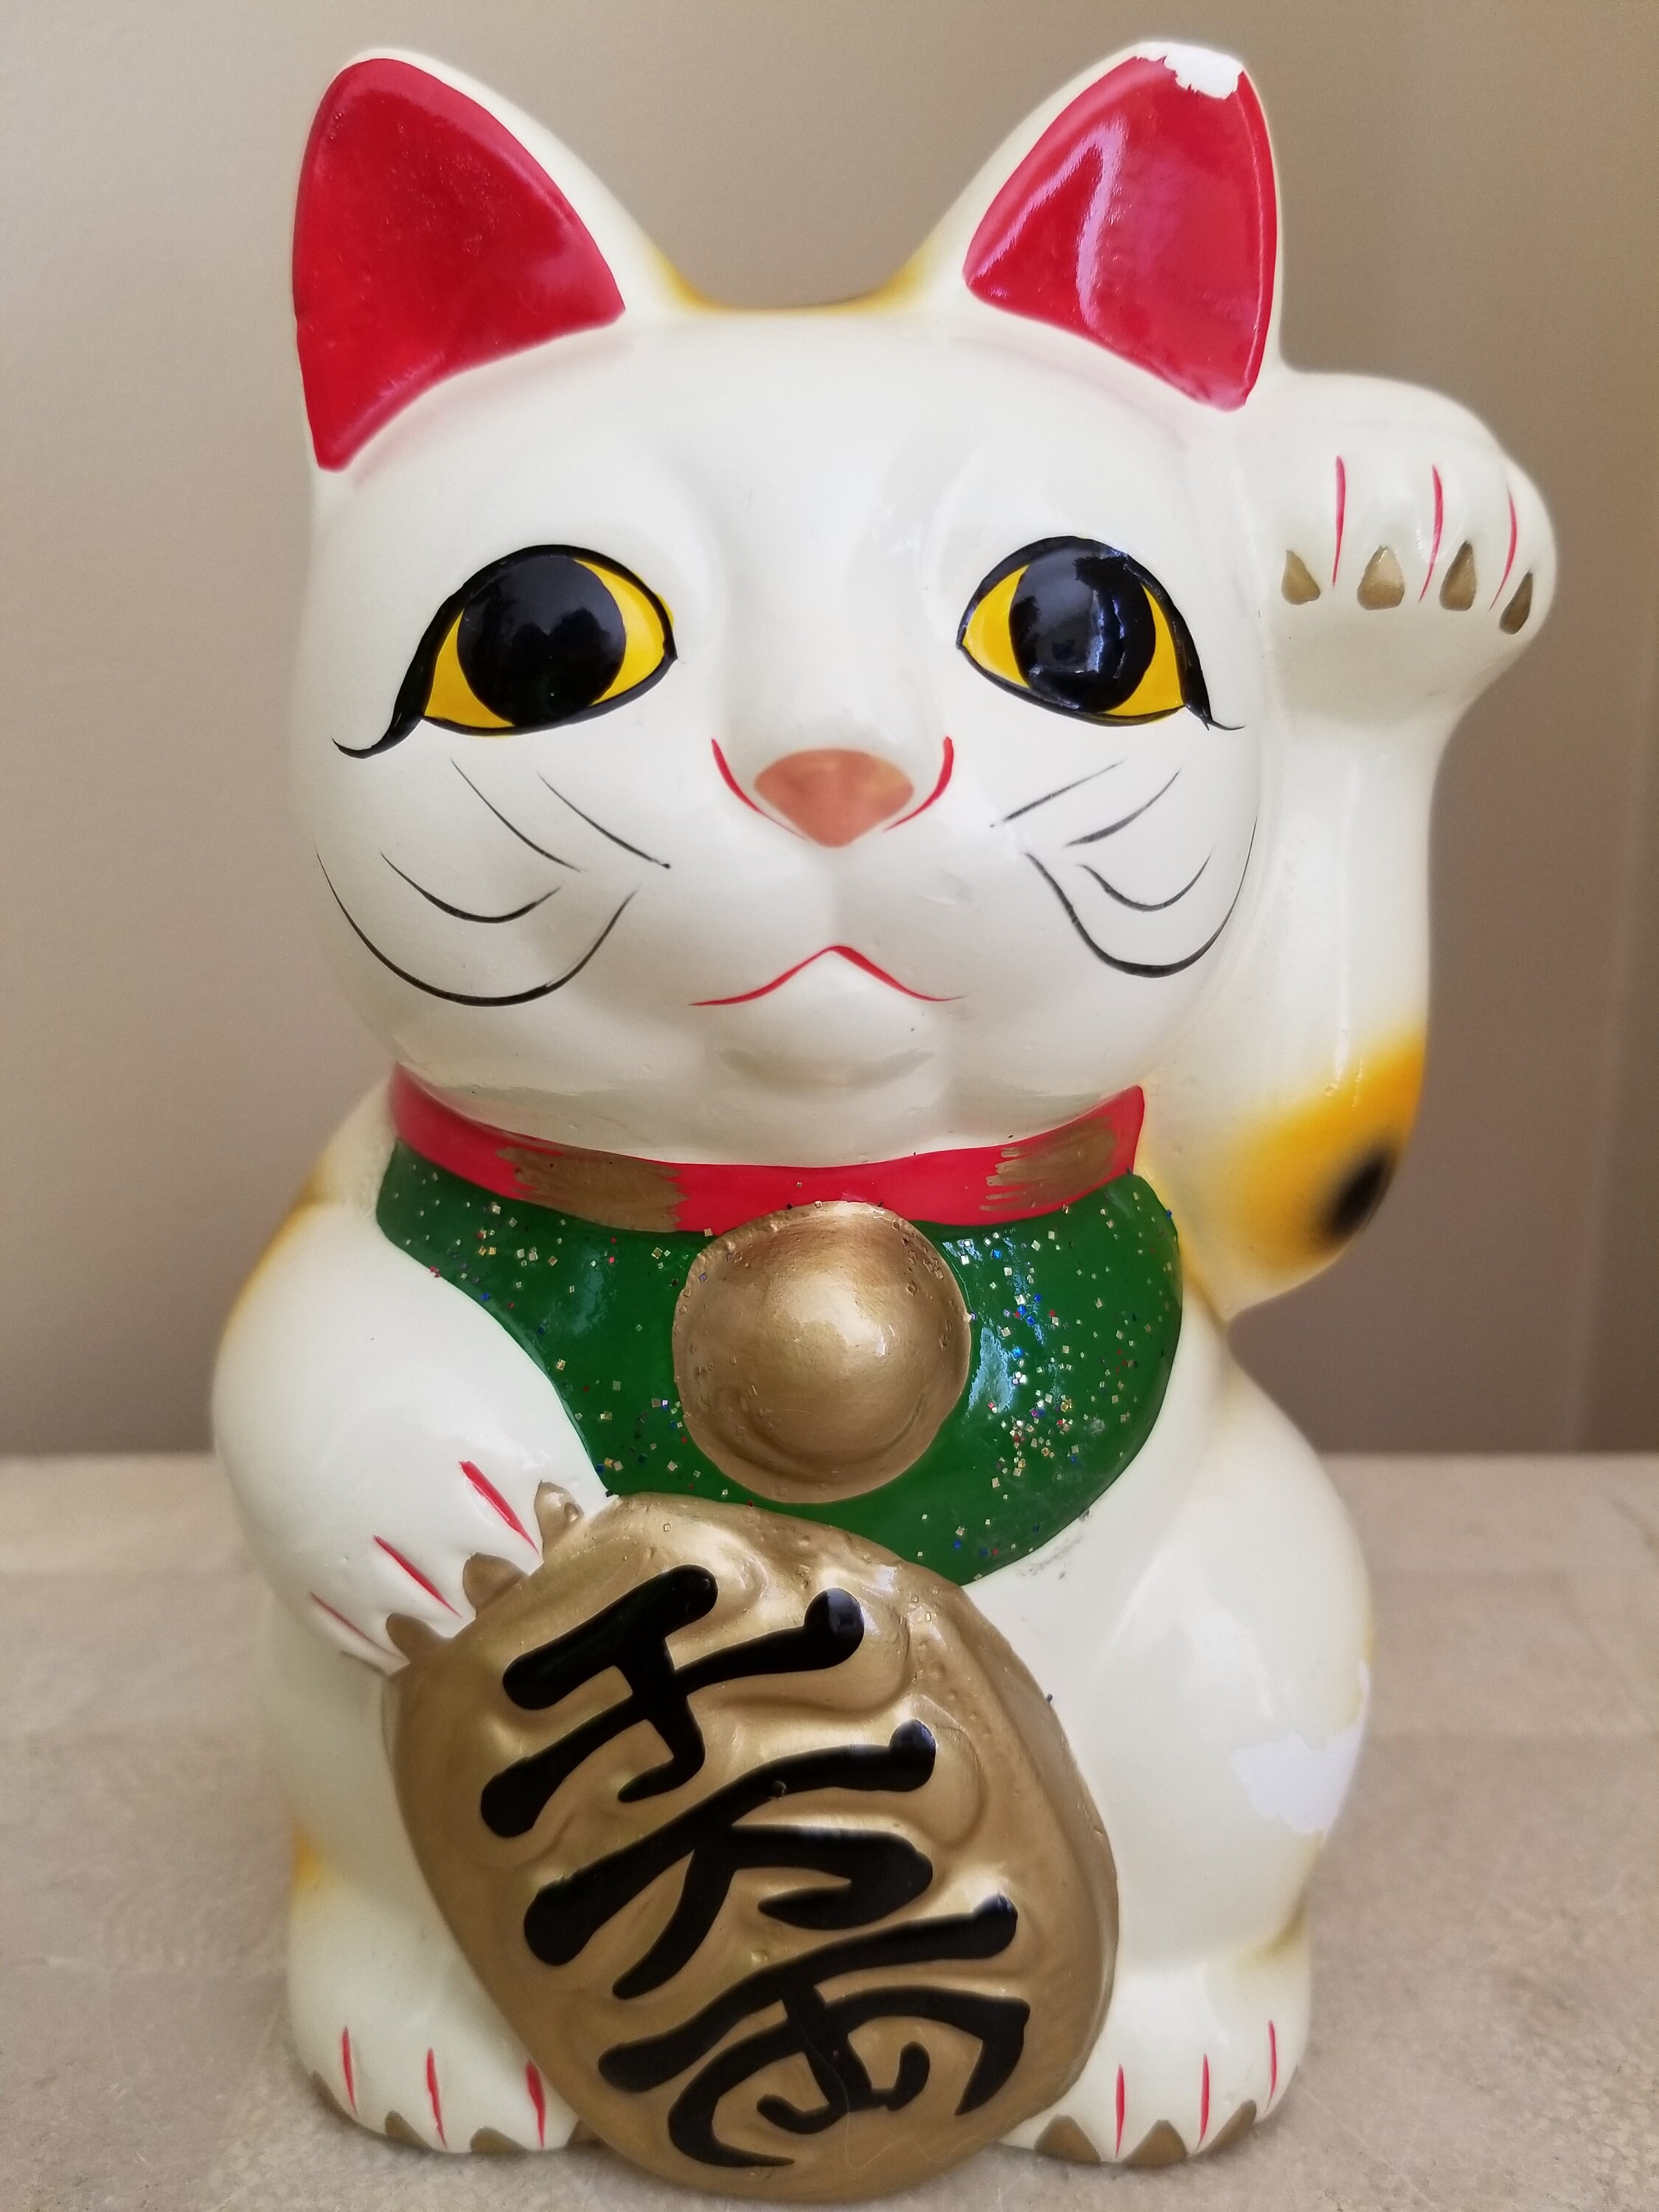 10 Pulgadas Gato Grande y ondeando, cerámica China Maneki Neko